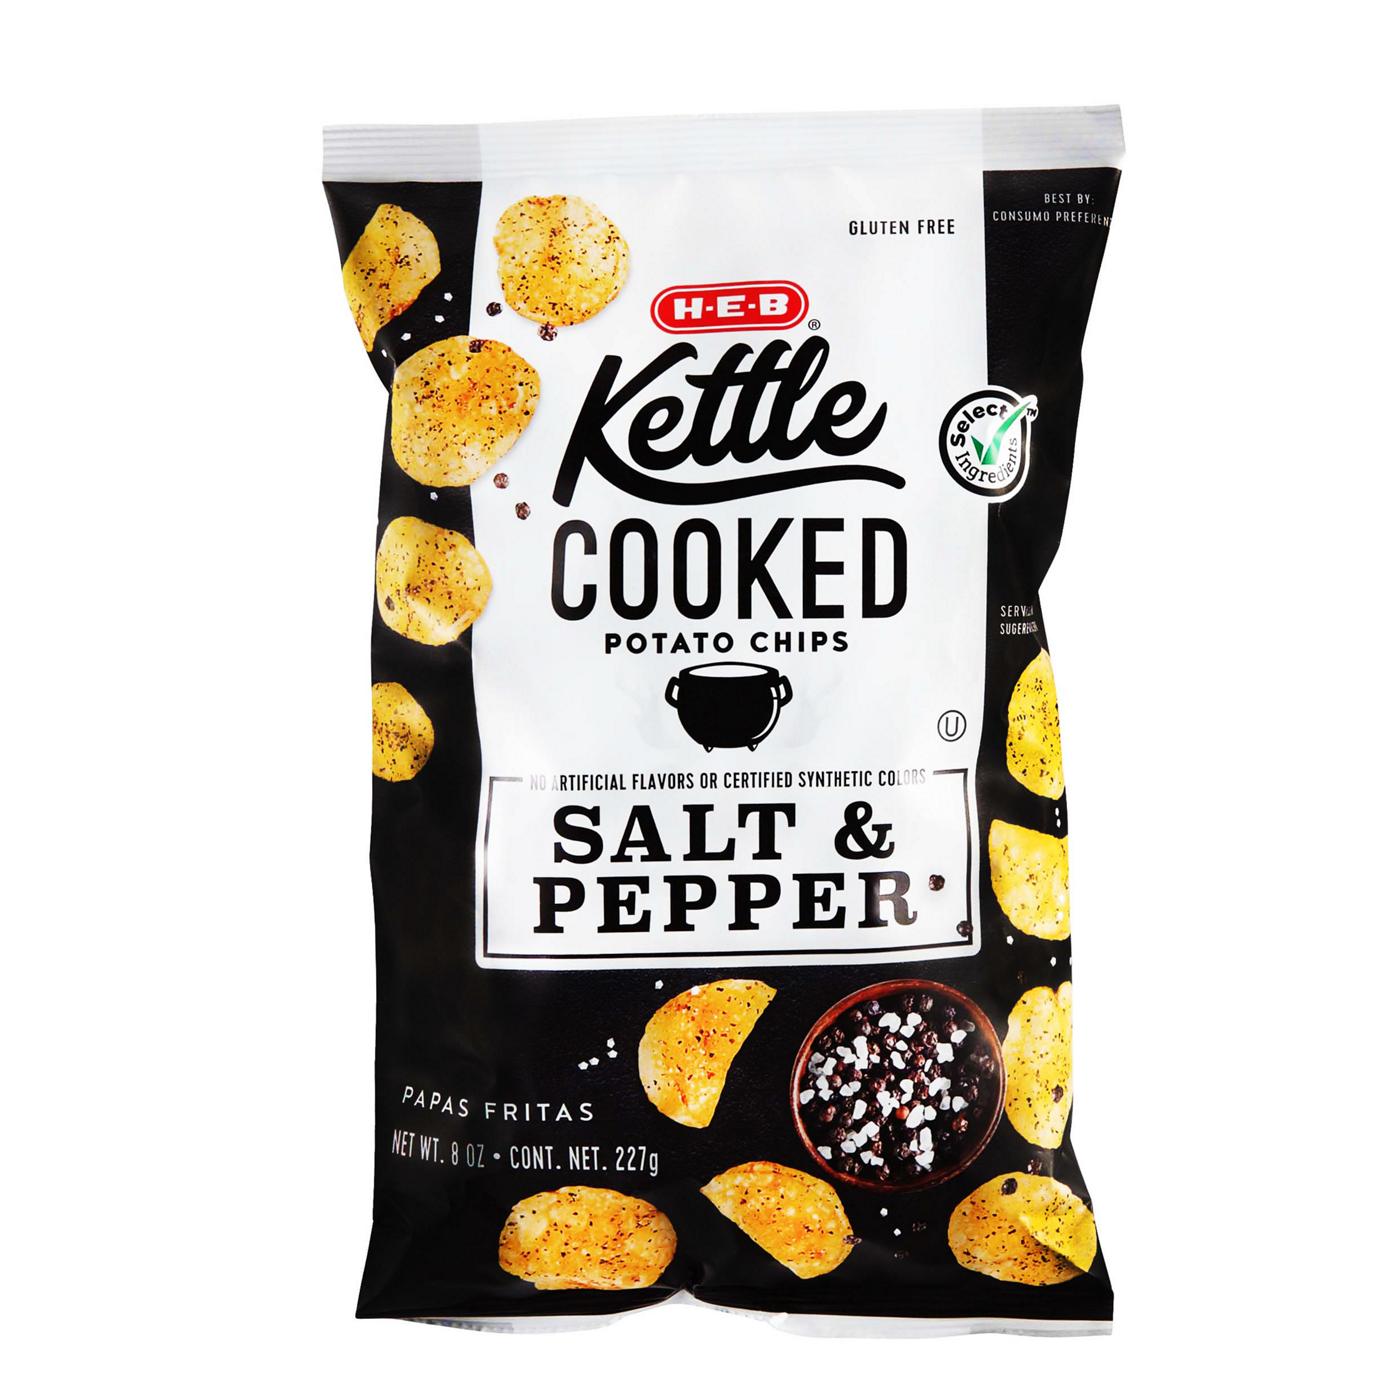 H-E-B Kettle Cooked Potato Chips - Salt & Pepper; image 1 of 2